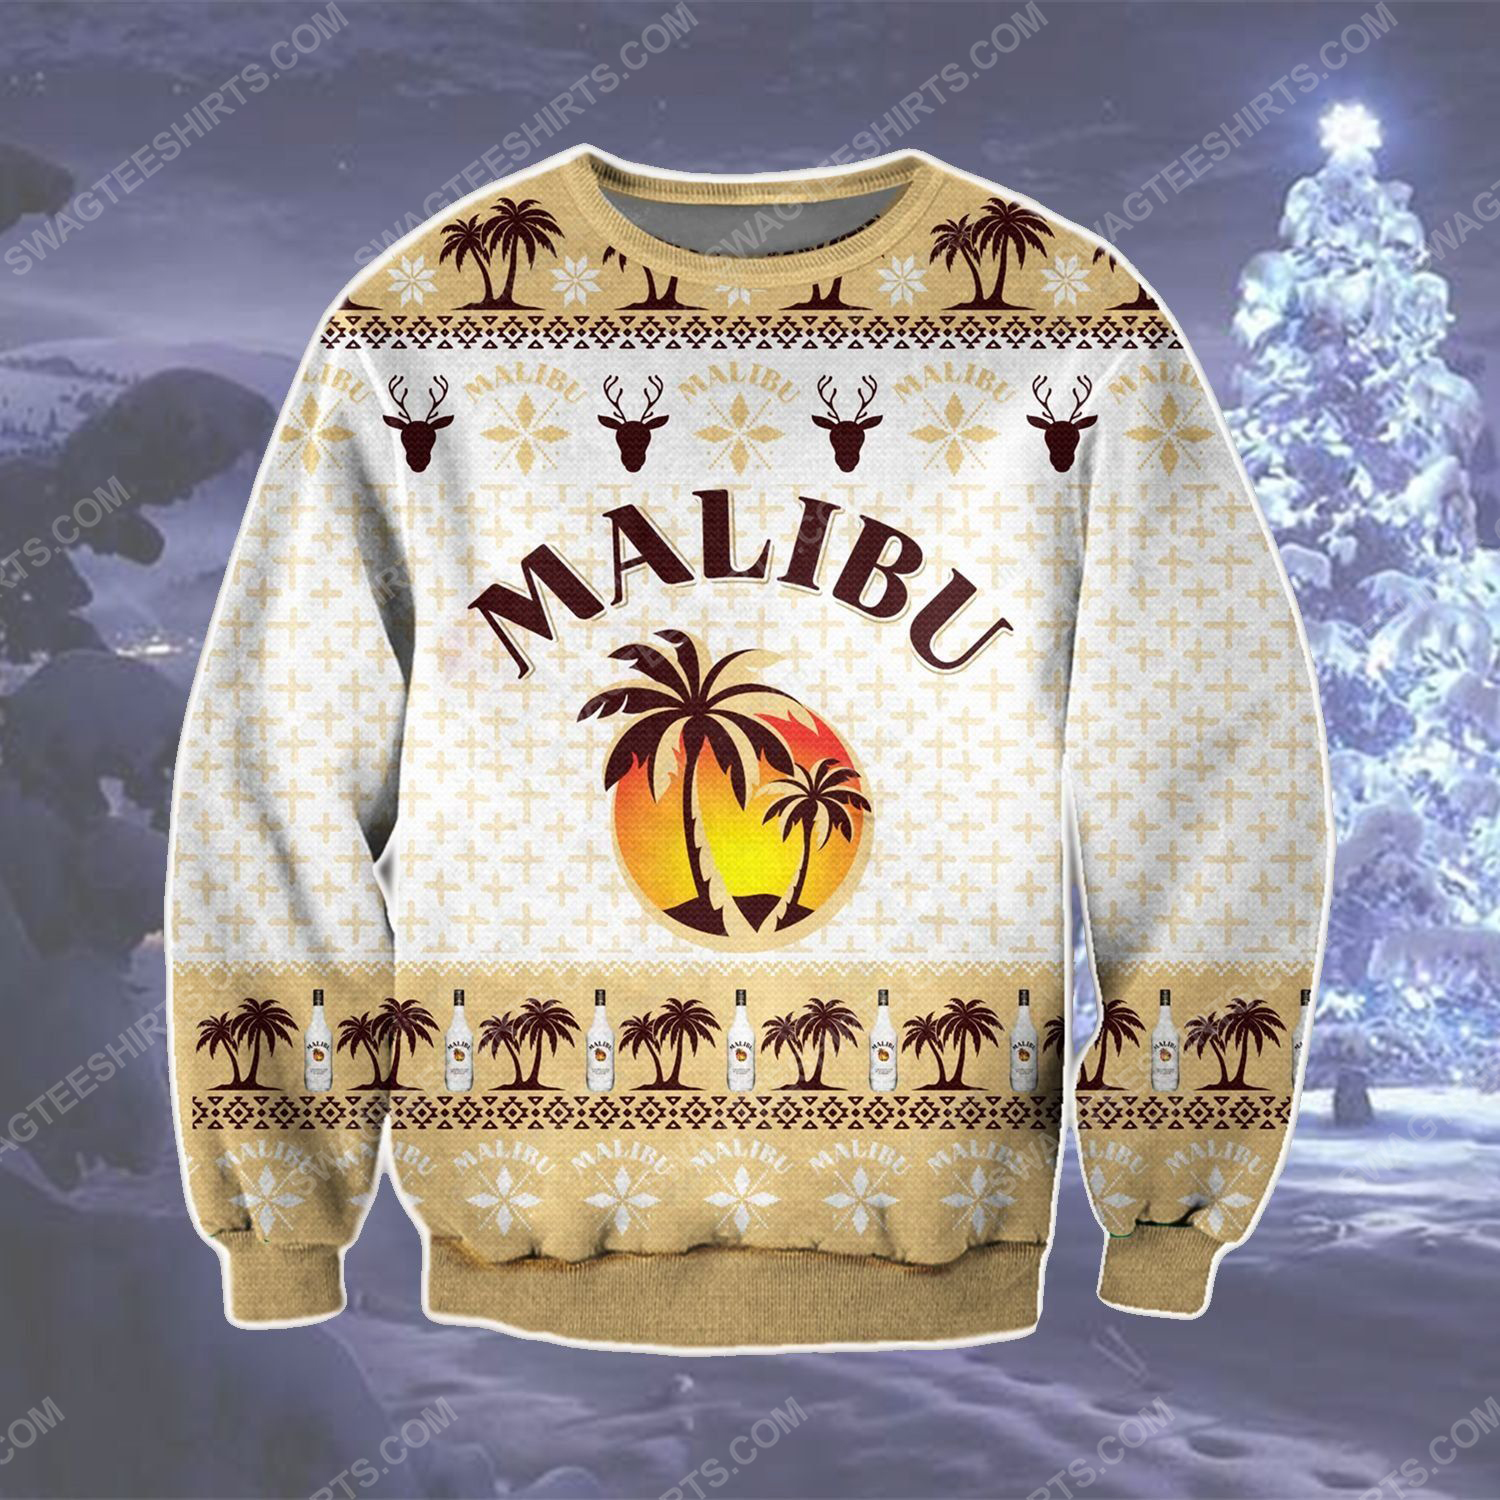 Malibu rum drinks ugly christmas sweater - Copy (2)